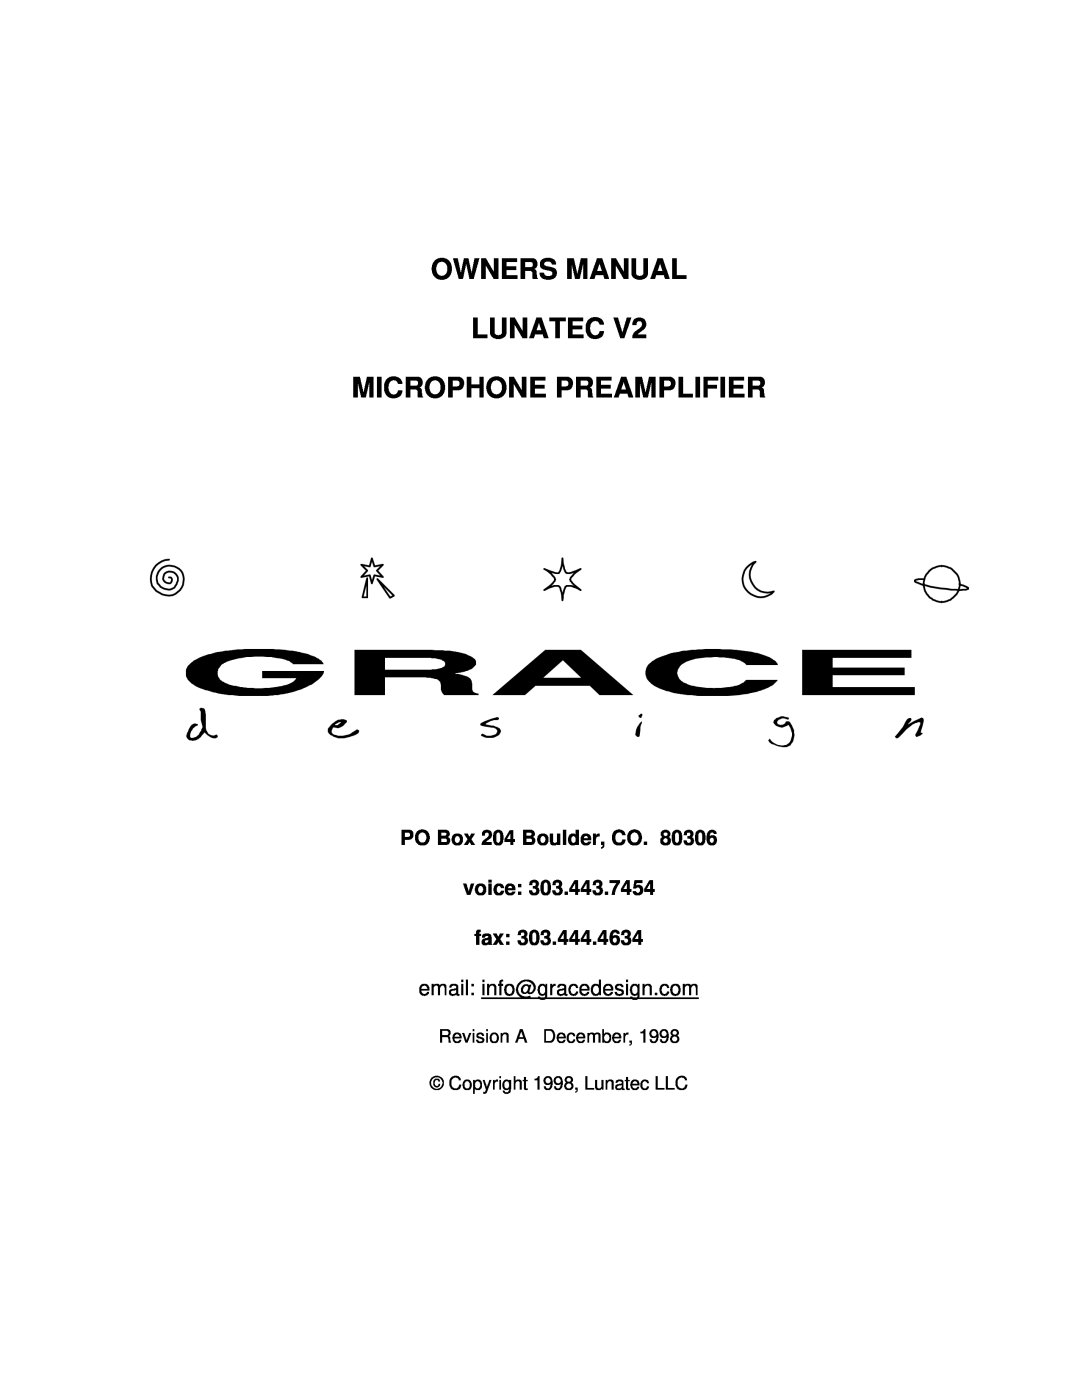 Microplane LUNATEC V2 owner manual PO Box 204 Boulder, CO. voice fax, Revision A December, Copyright 1998, Lunatec LLC 